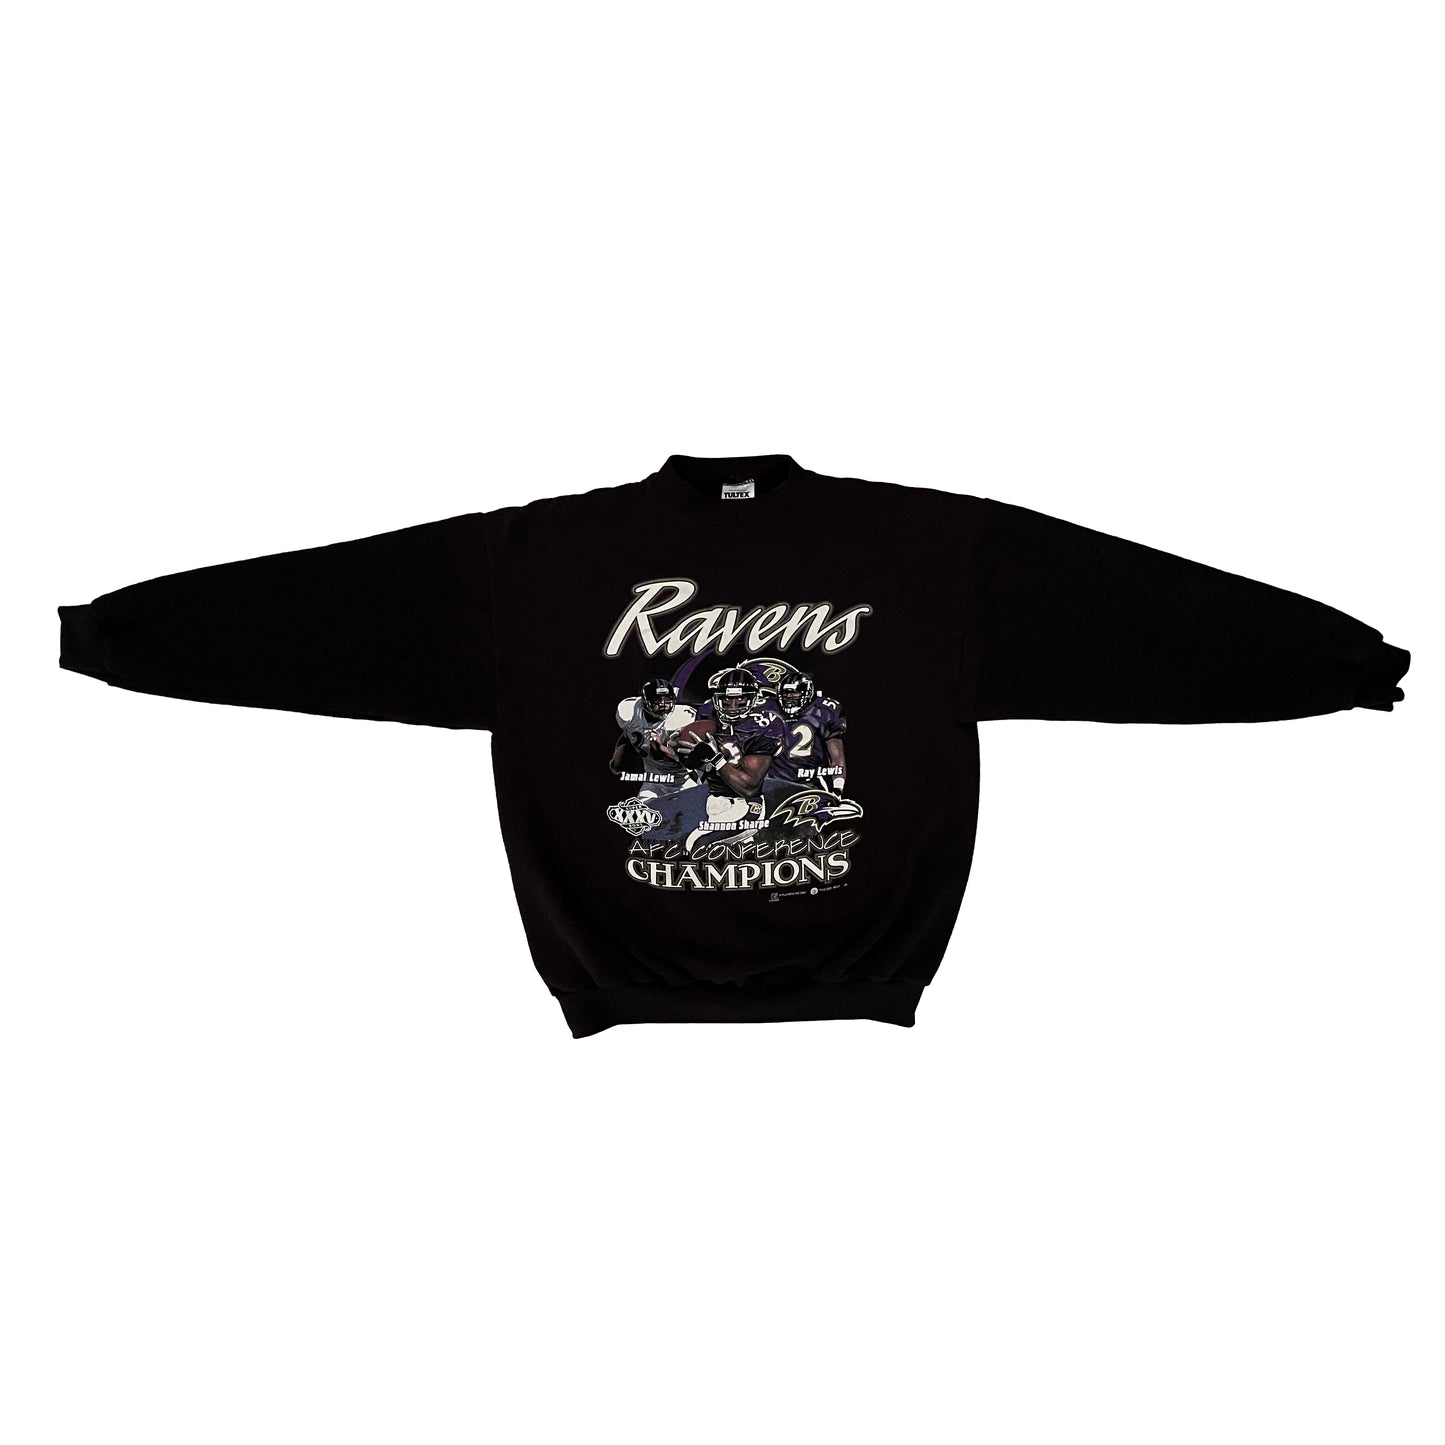 Baltimore Ravens AFC Champions 2001 sweatshirt